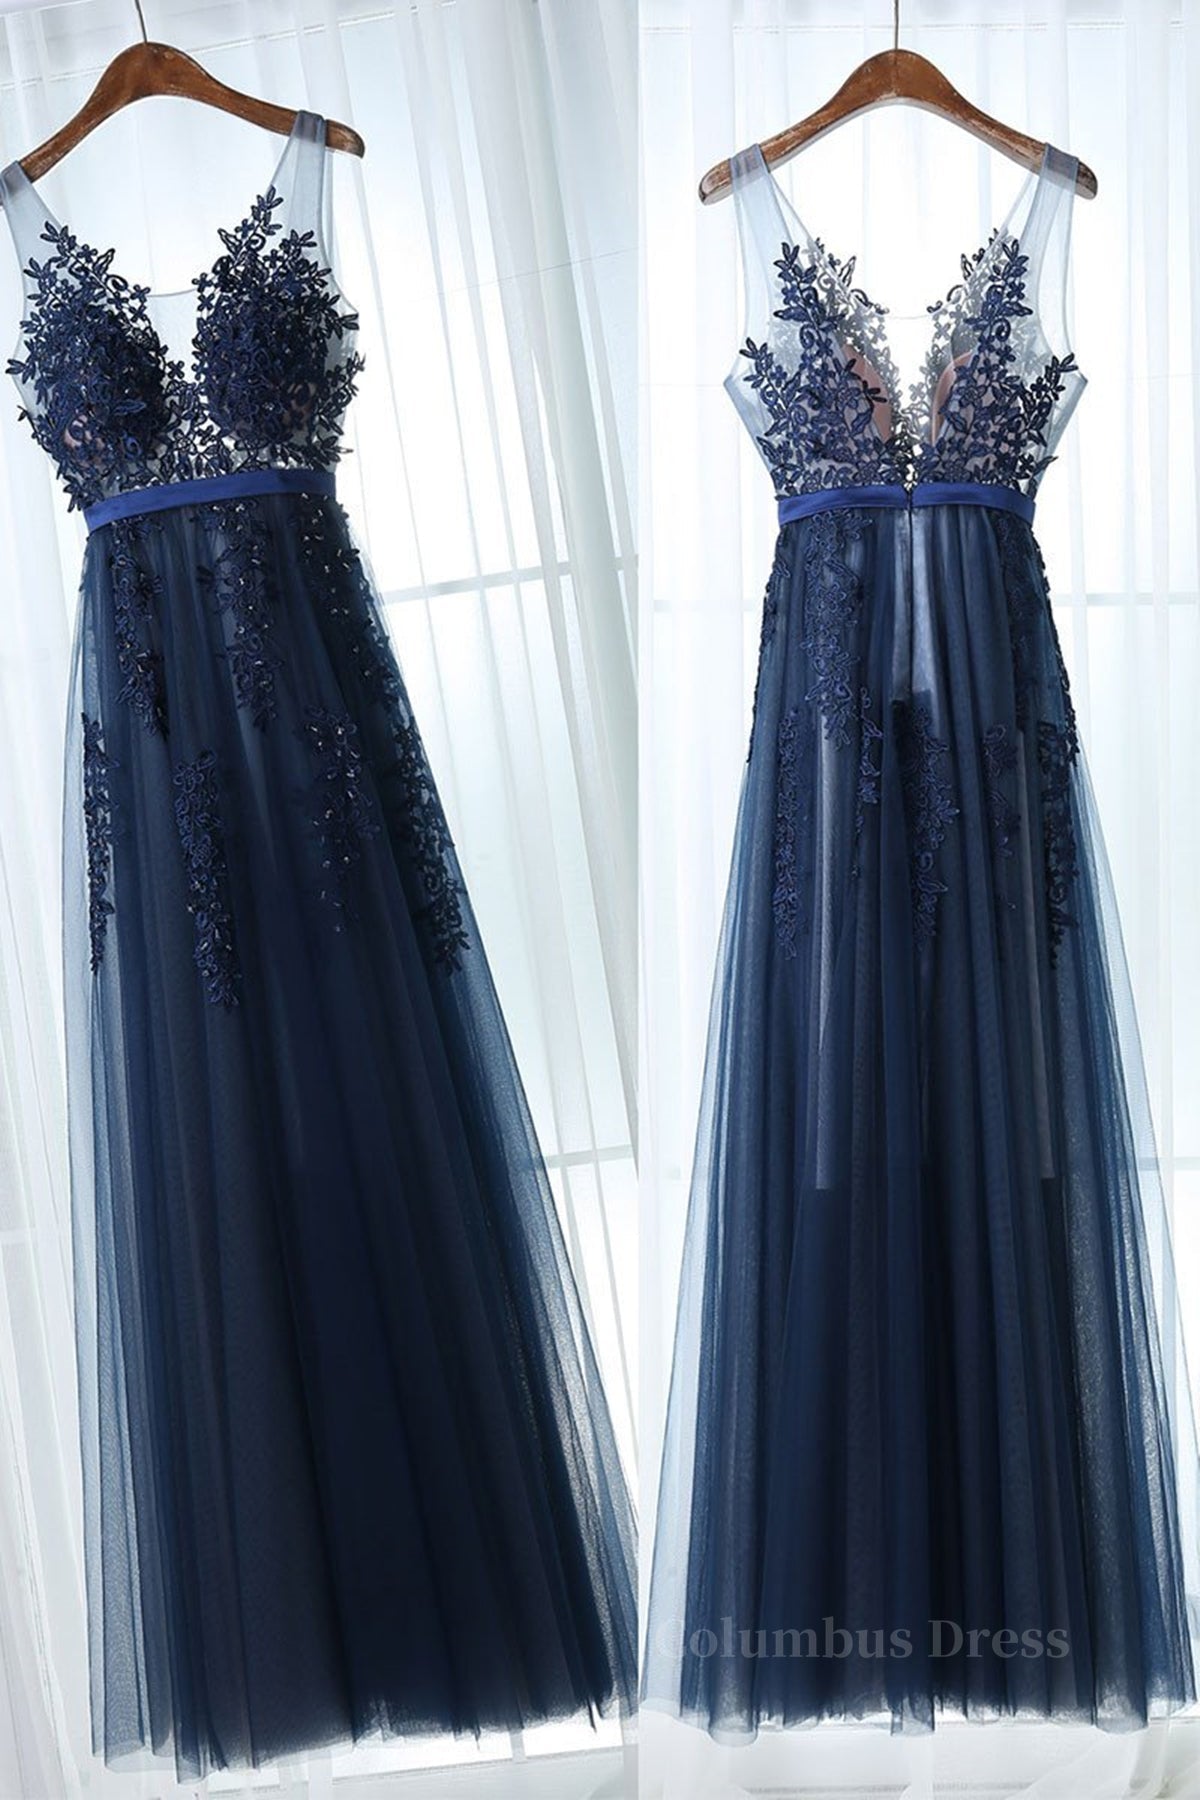 Party Dress Modest, Dark Navy Blue Lace Prom Dresses, Dark Navy Blue Lace Formal Bridesmaid Dresses